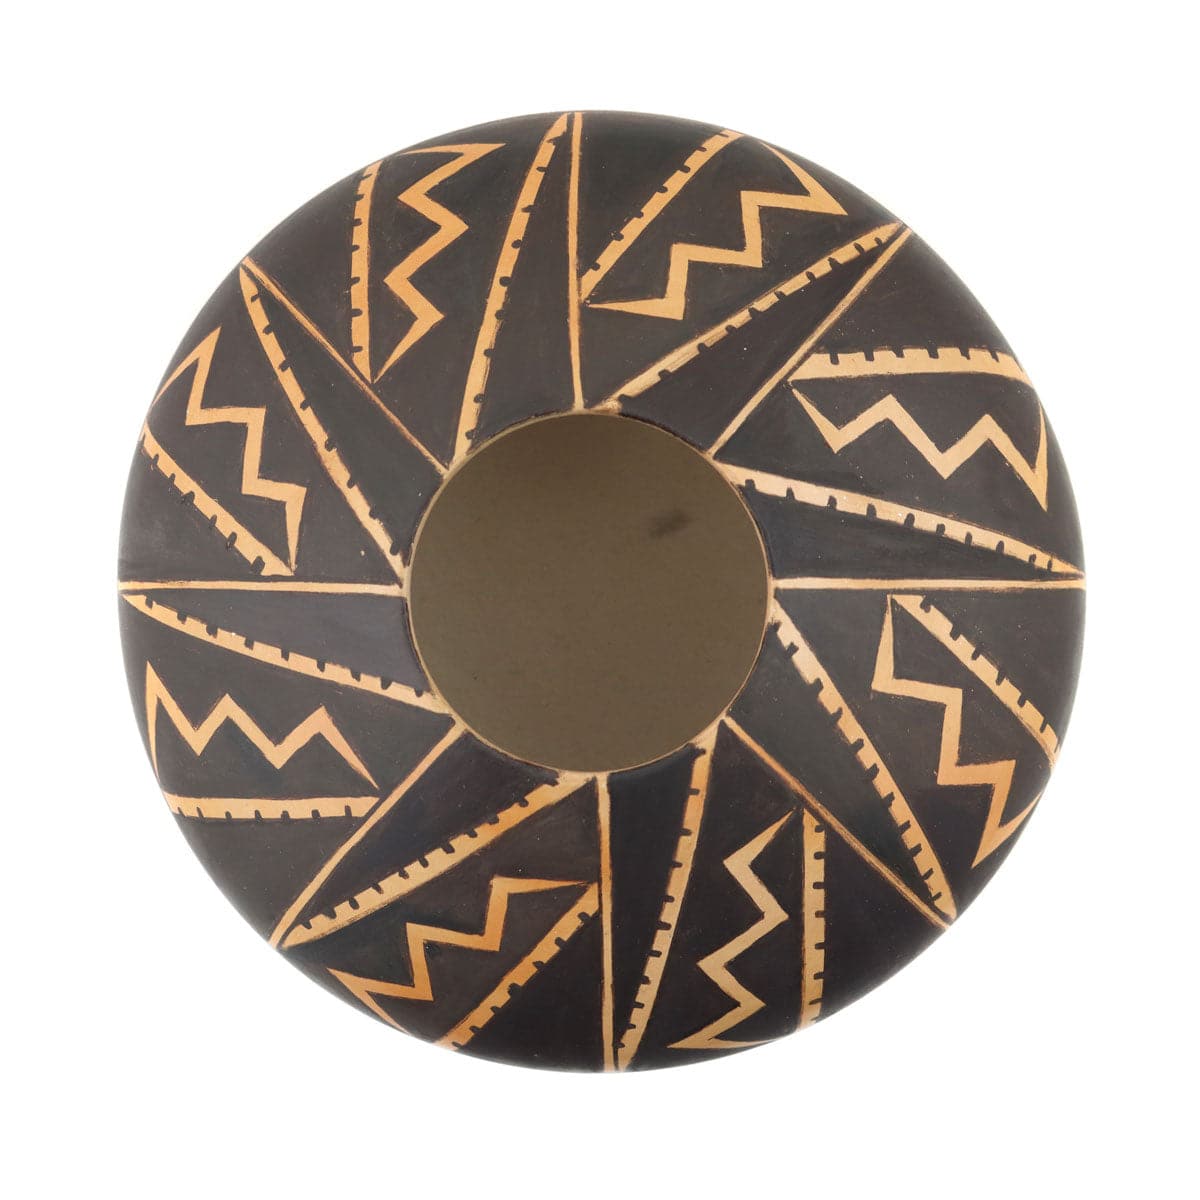 Dextra Quotskuyva Nampeyo (1928-2019) - Hopi Contemporary Jar with Spiral Zig-Zag Design, 3.25" x 5.625" (P91138A-0222-001)